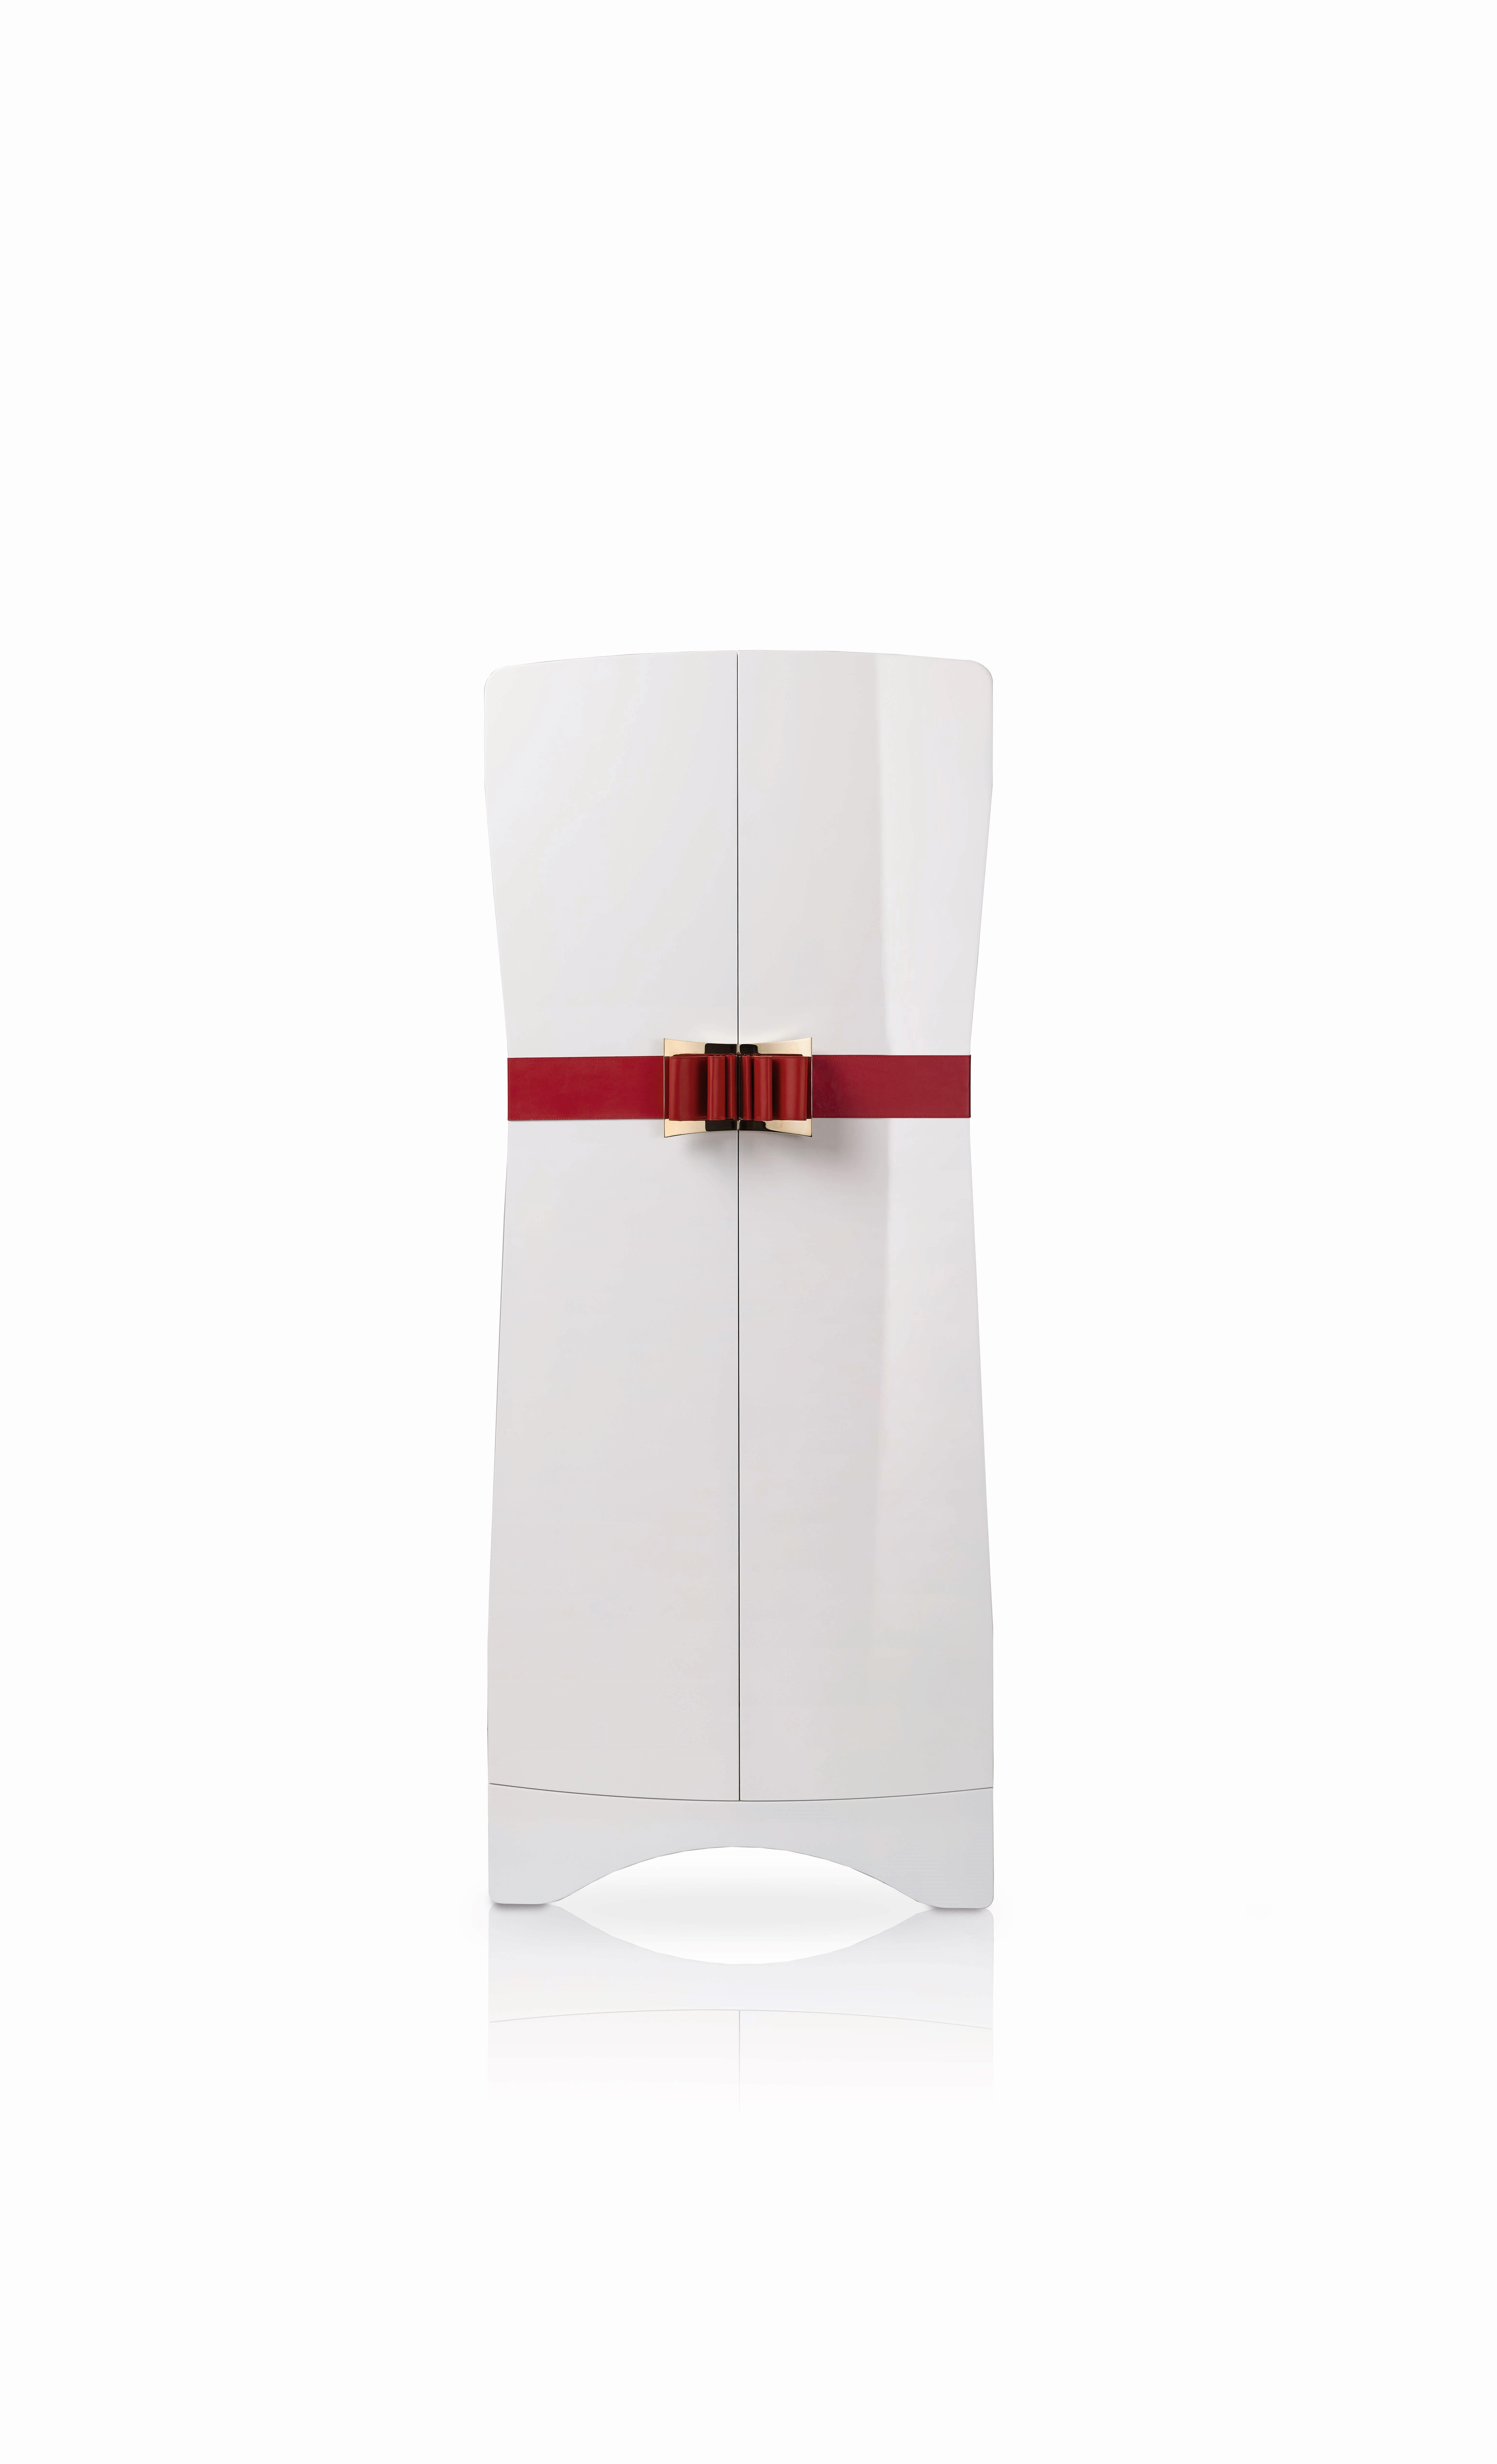 Agresti Contemporary Fiocco Armoire Safe in Shiny White Maple For Sale